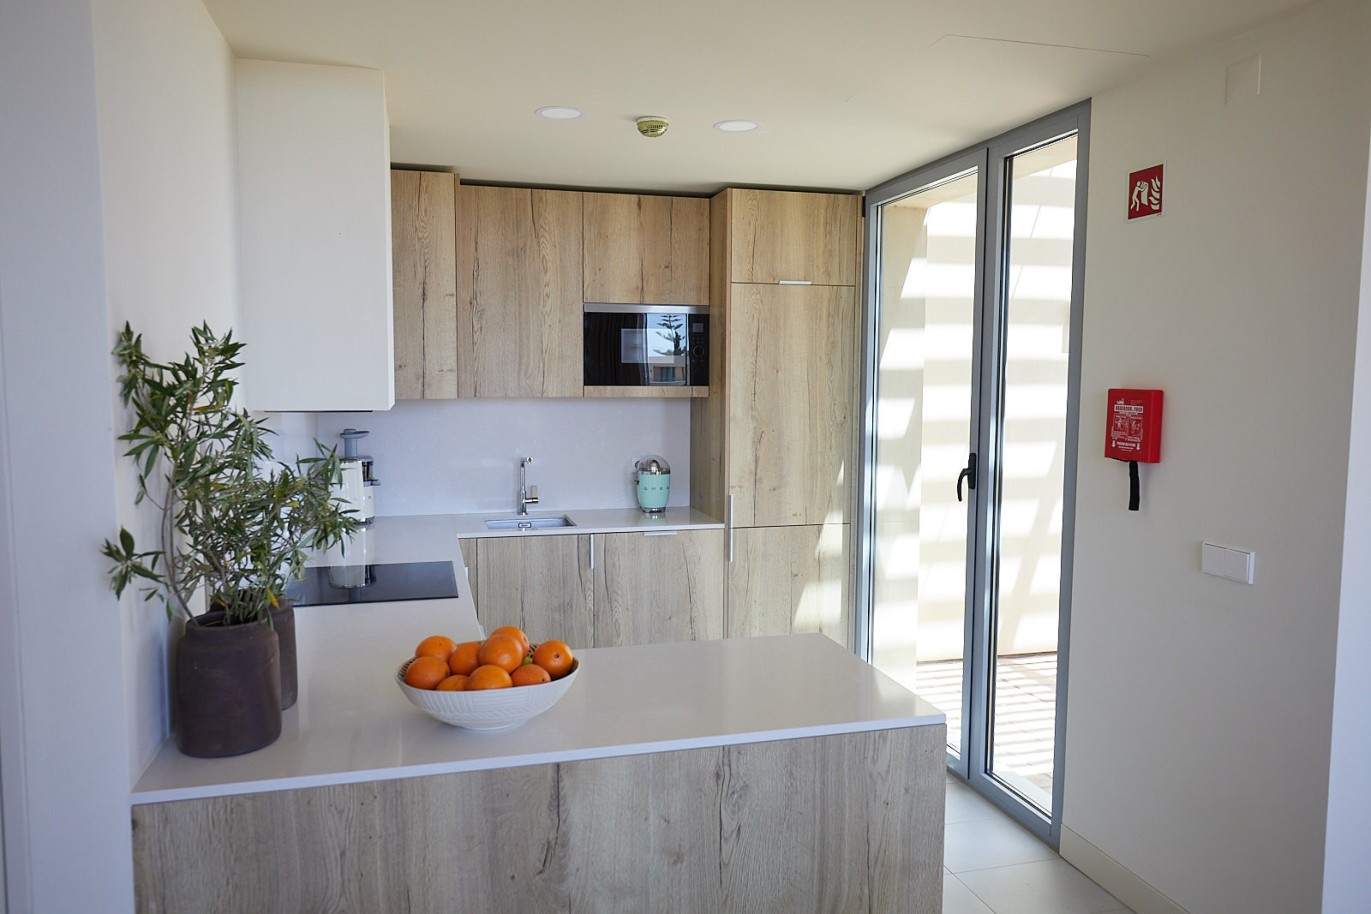 2 bedroom apartment in resort, for sale in Porches, Algarve_228787